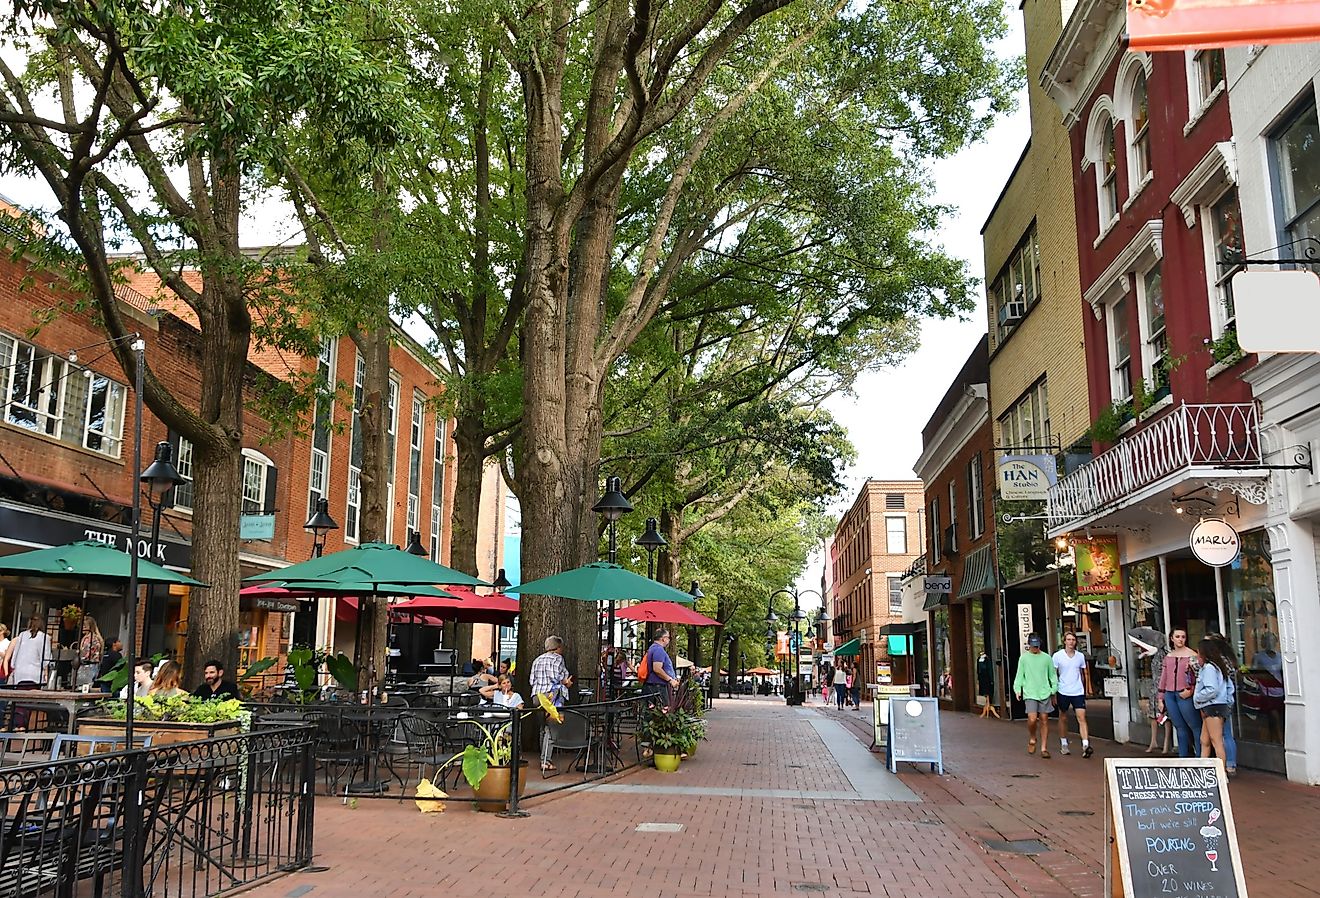 Downtown Mall in Charlottesville, Virginia. Image credit MargJohnsonVA via Shutterstock